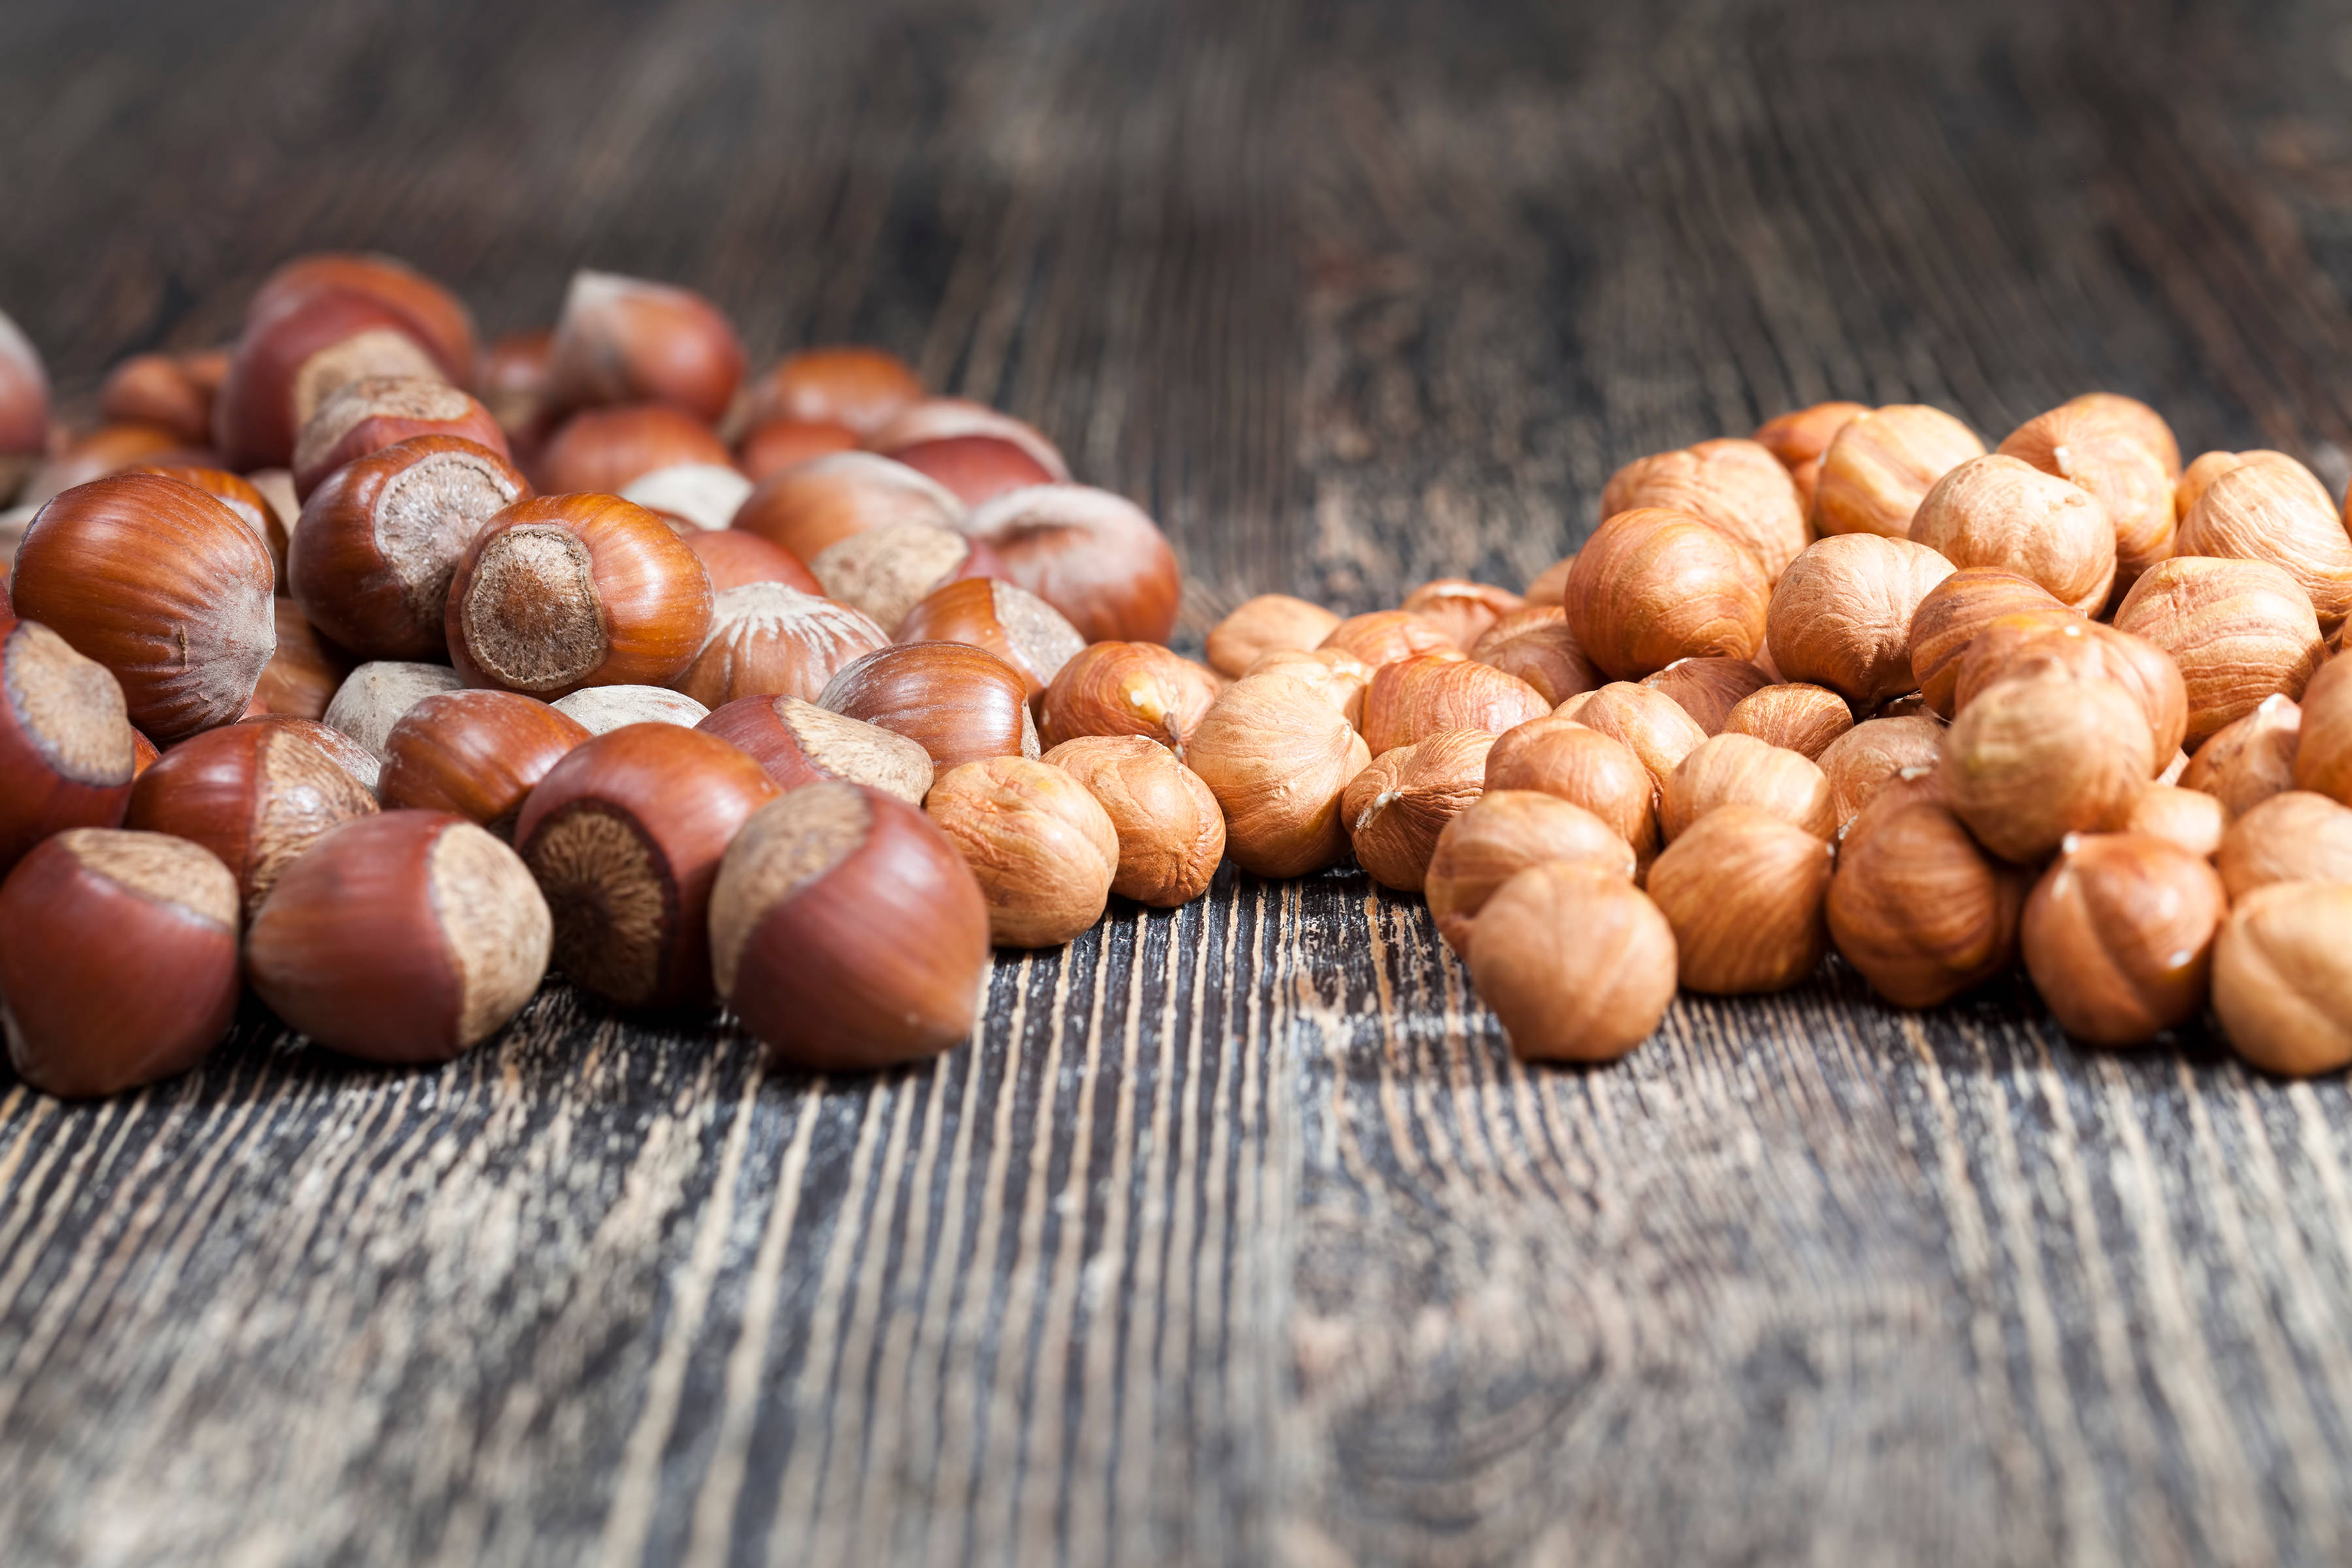 Hazelnuts scattered on a table. Photo: ligora / iStock.